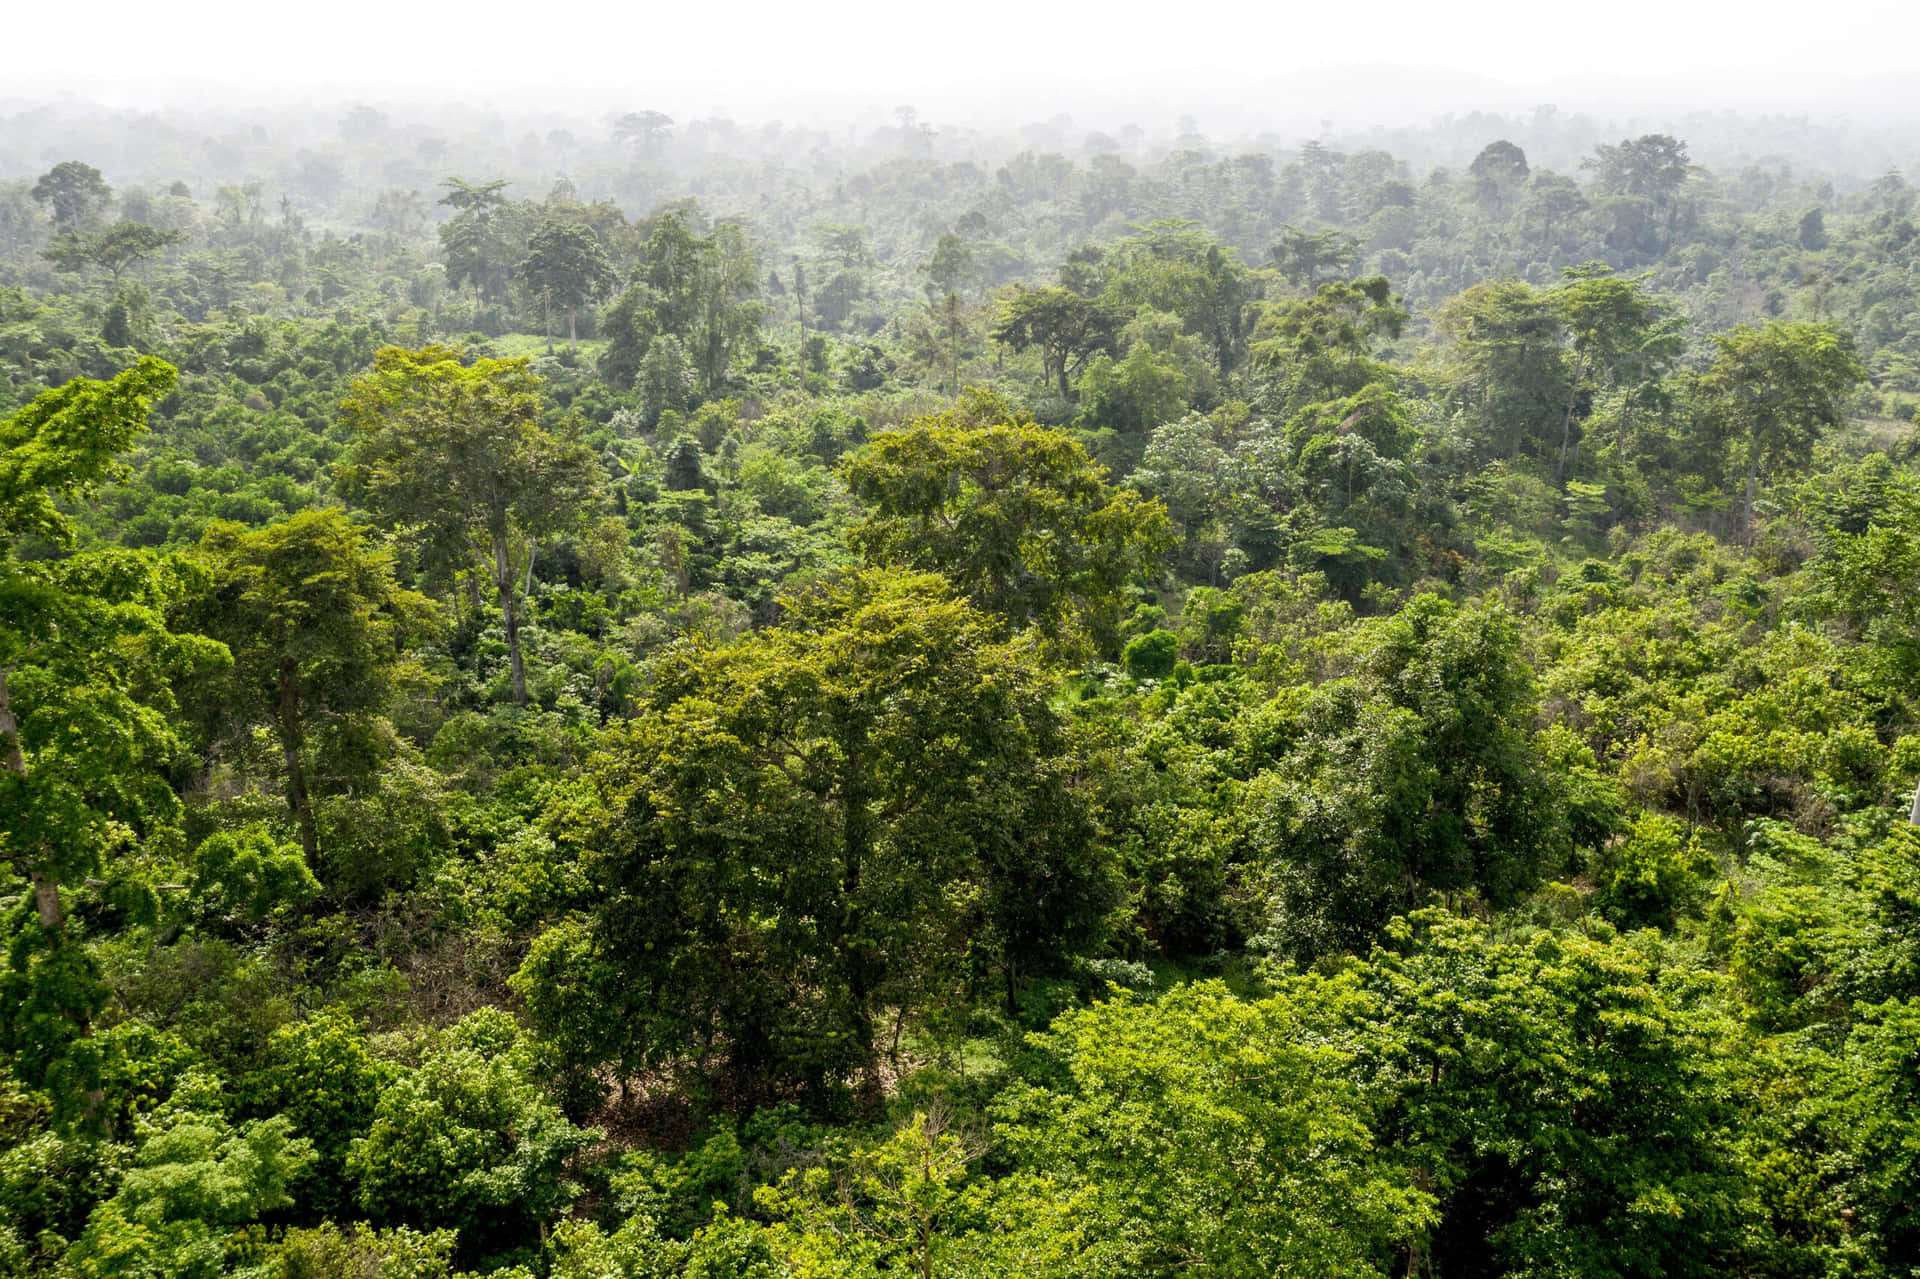 The vibrant beauty of the Amazon Rainforest